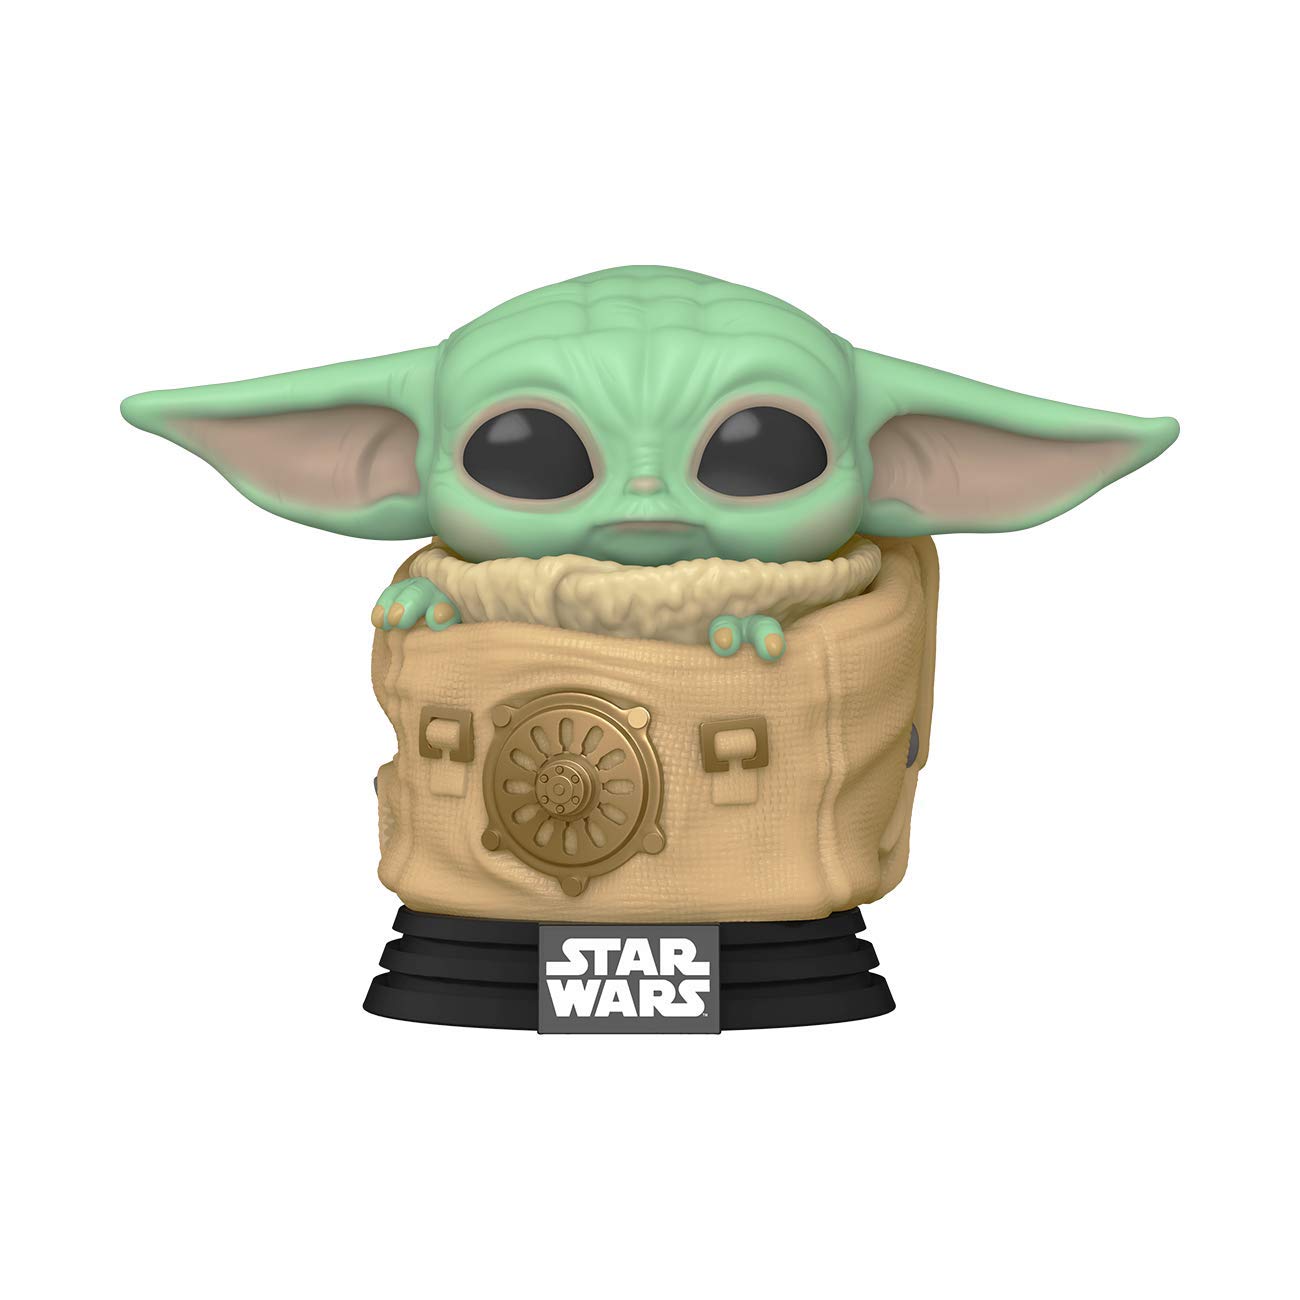 Funko Pop! Star Wars: The Mandalorian Toy, The Child Grogu in a Bag